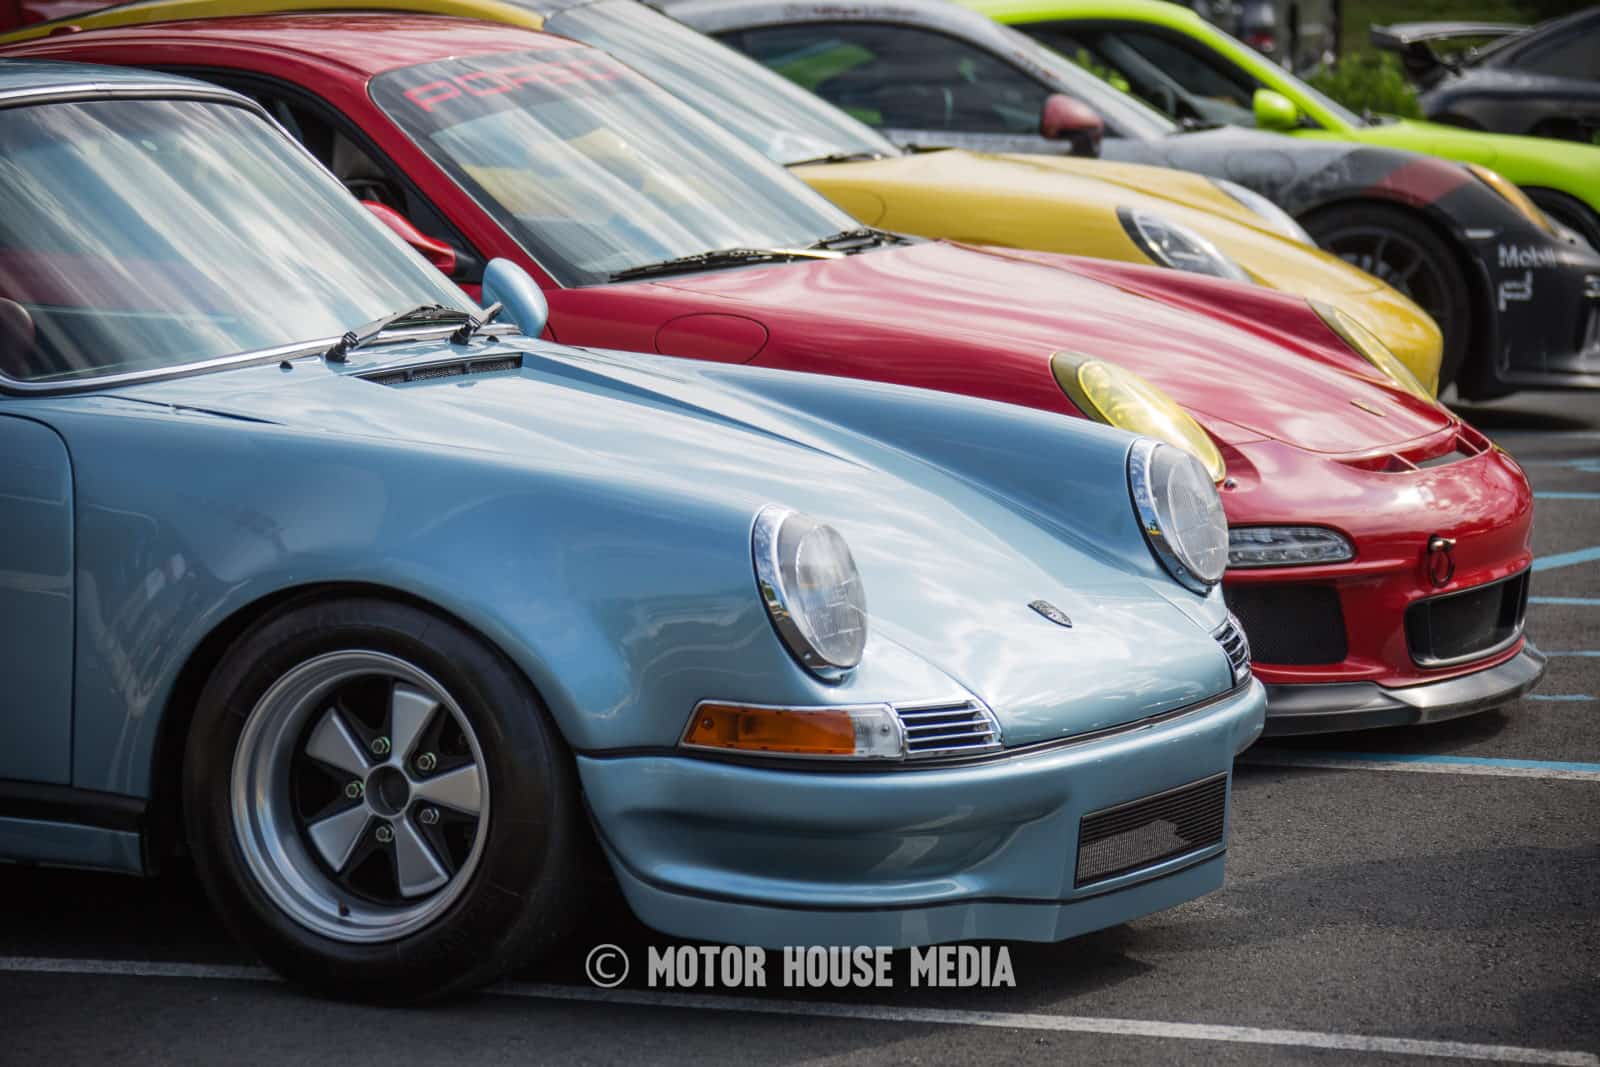 A variety of Porsches